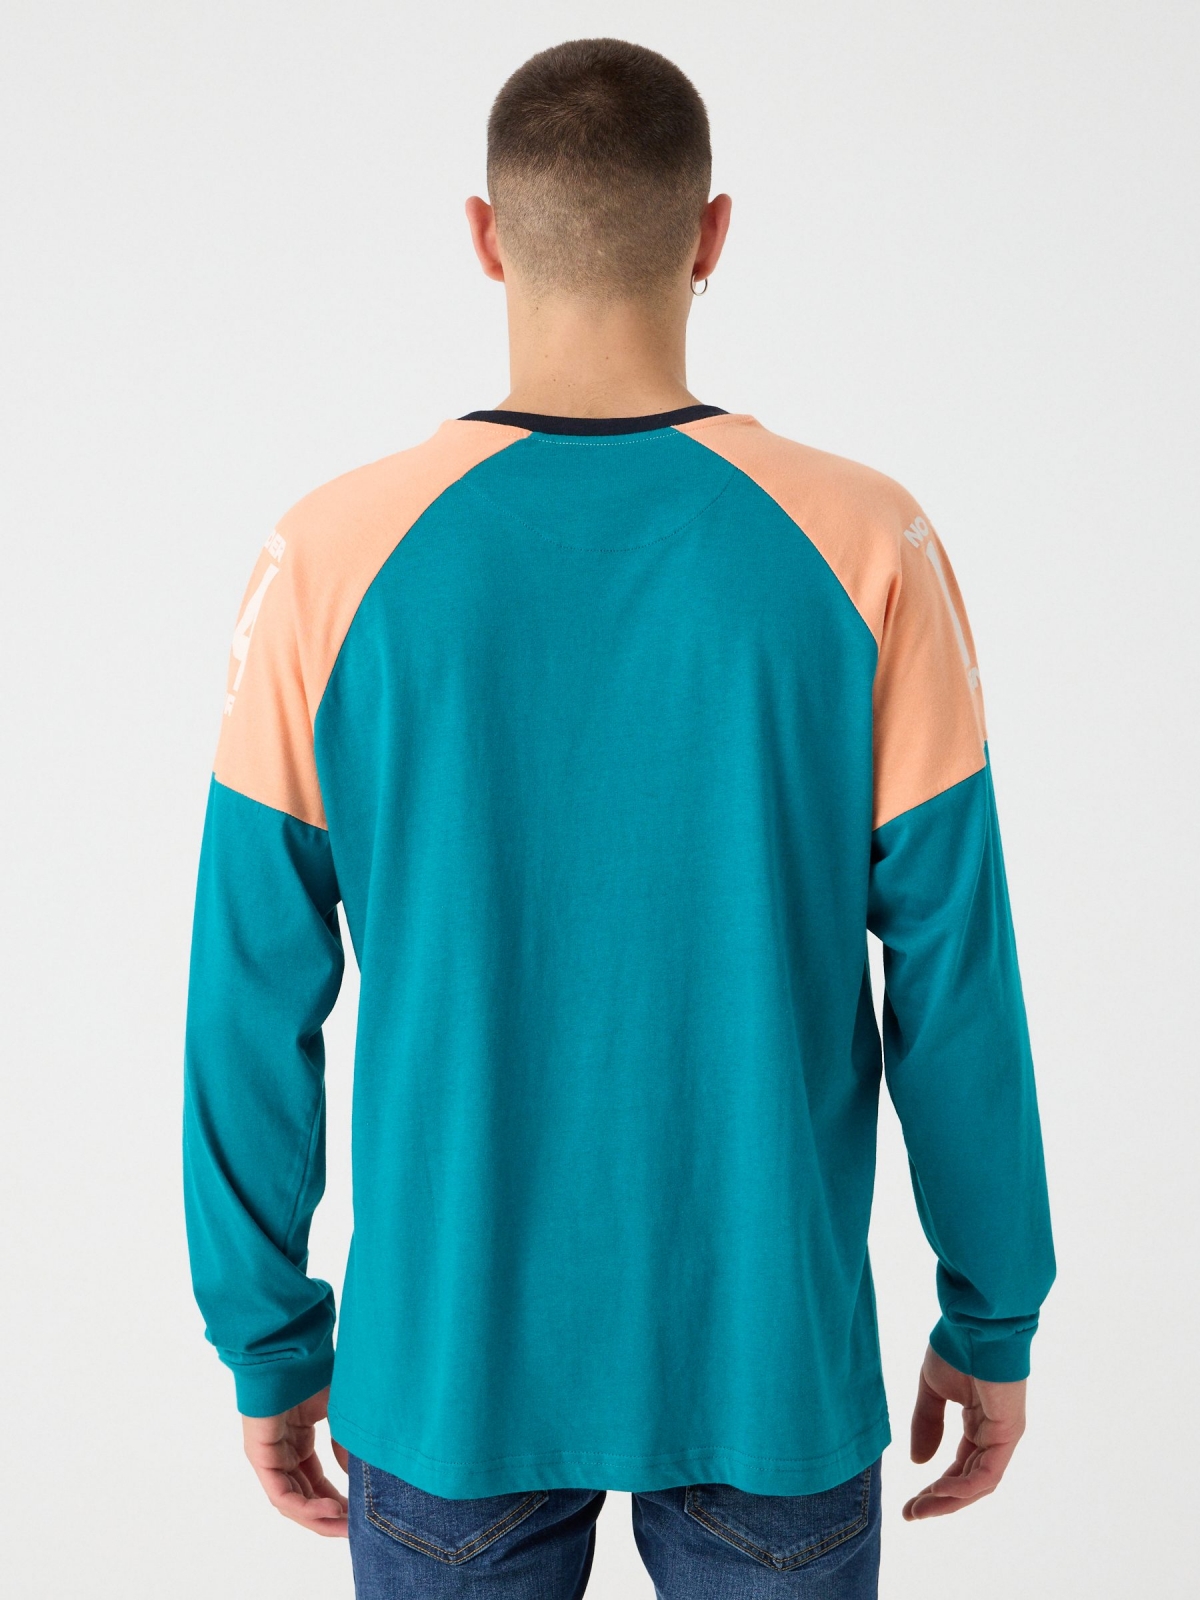 Ranglan sport shirt emerald middle back view